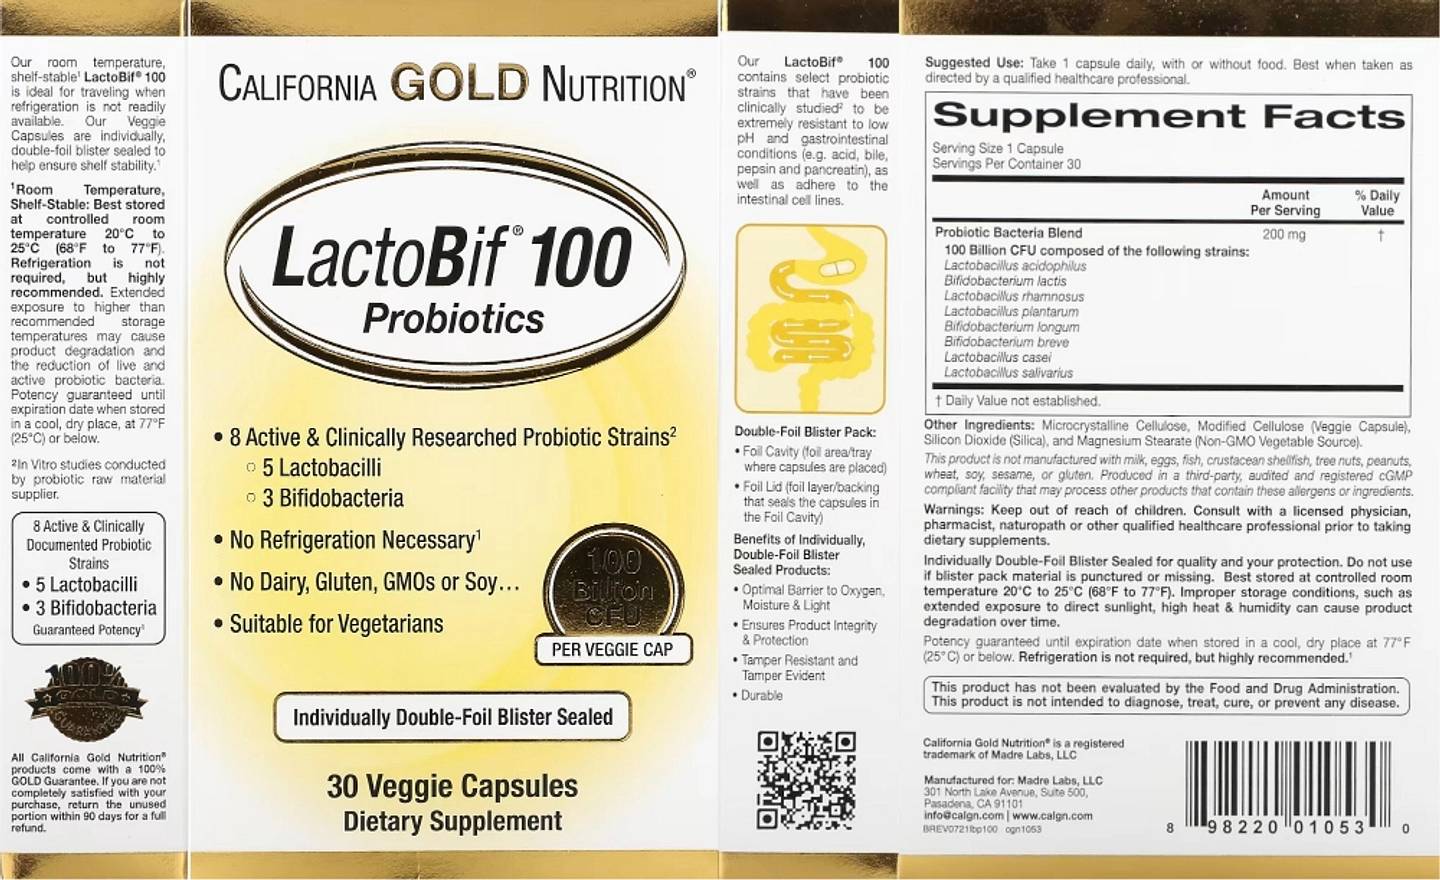 California Gold Nutrition, LactoBif 100 Probiotics label